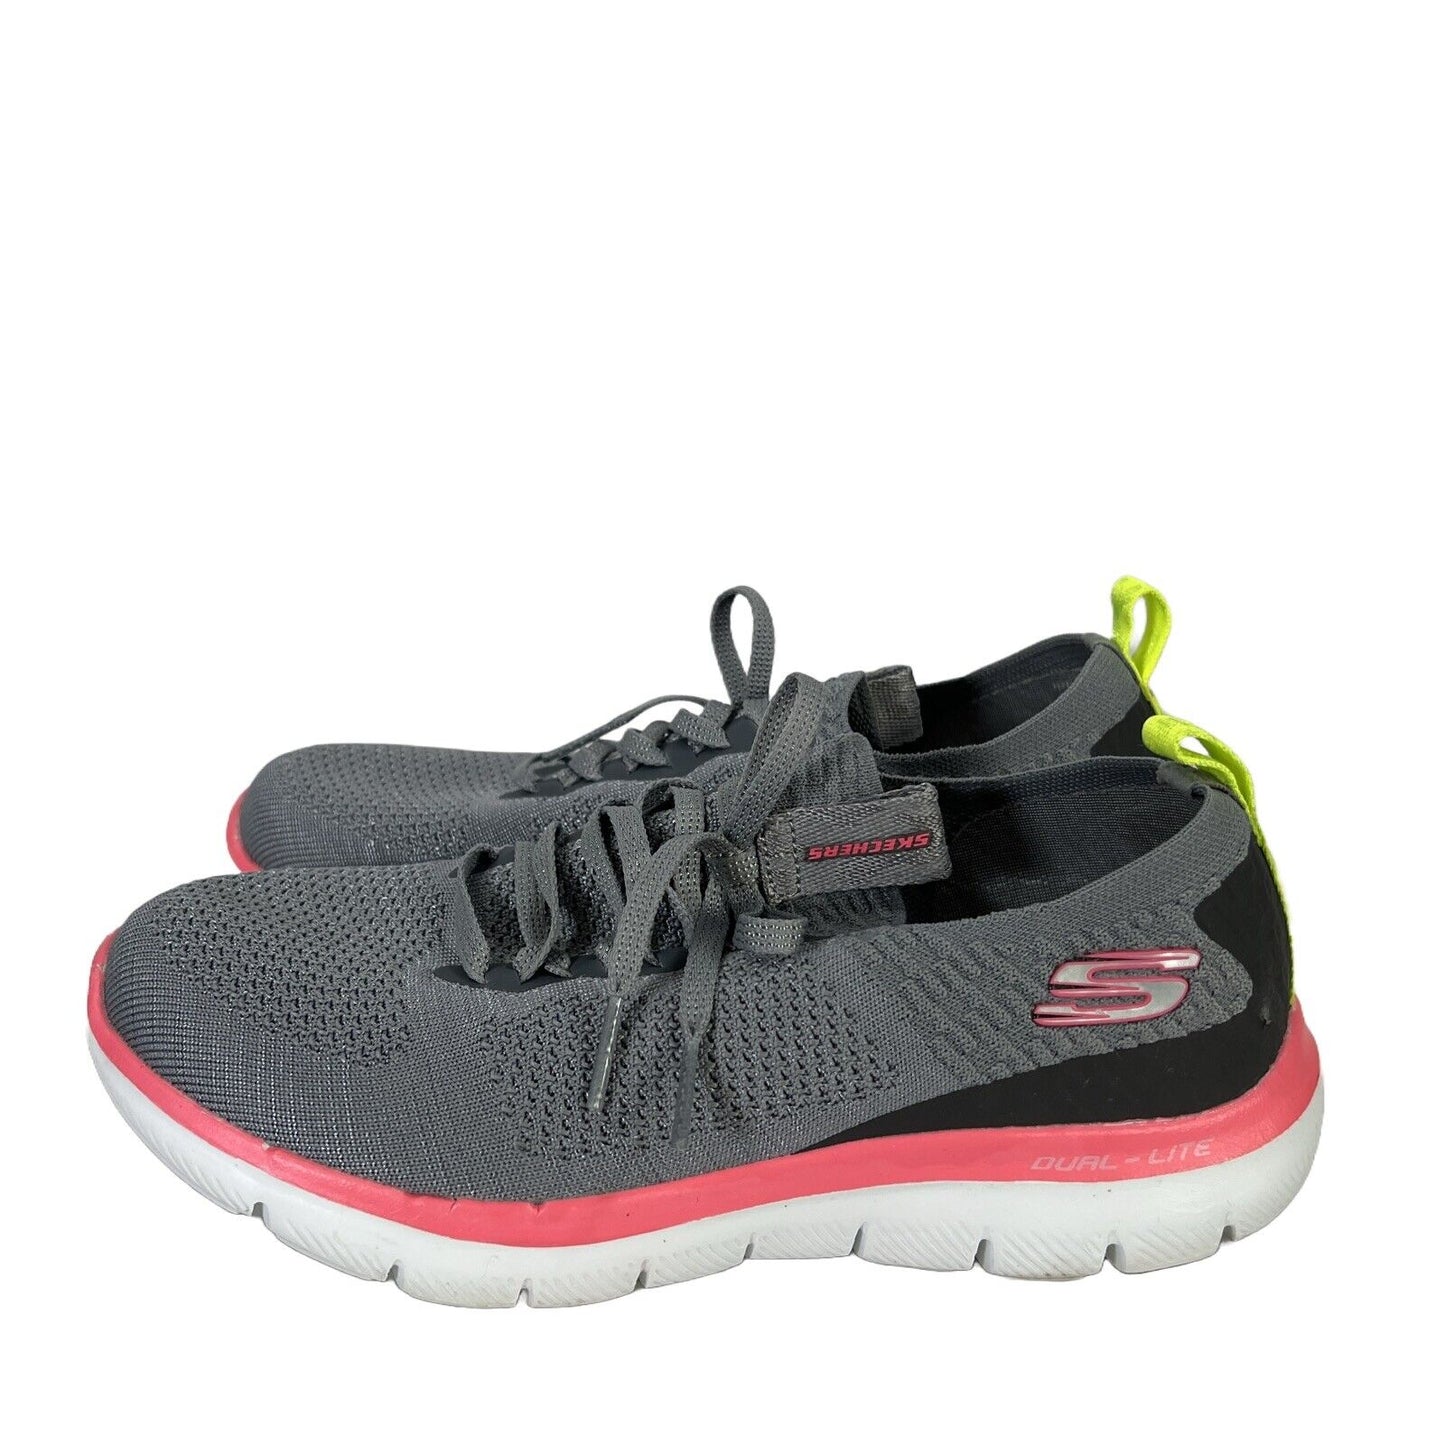 Skechers Women's Gray Dual Lite Memory Foam Comfort Athletic Shoes - 8